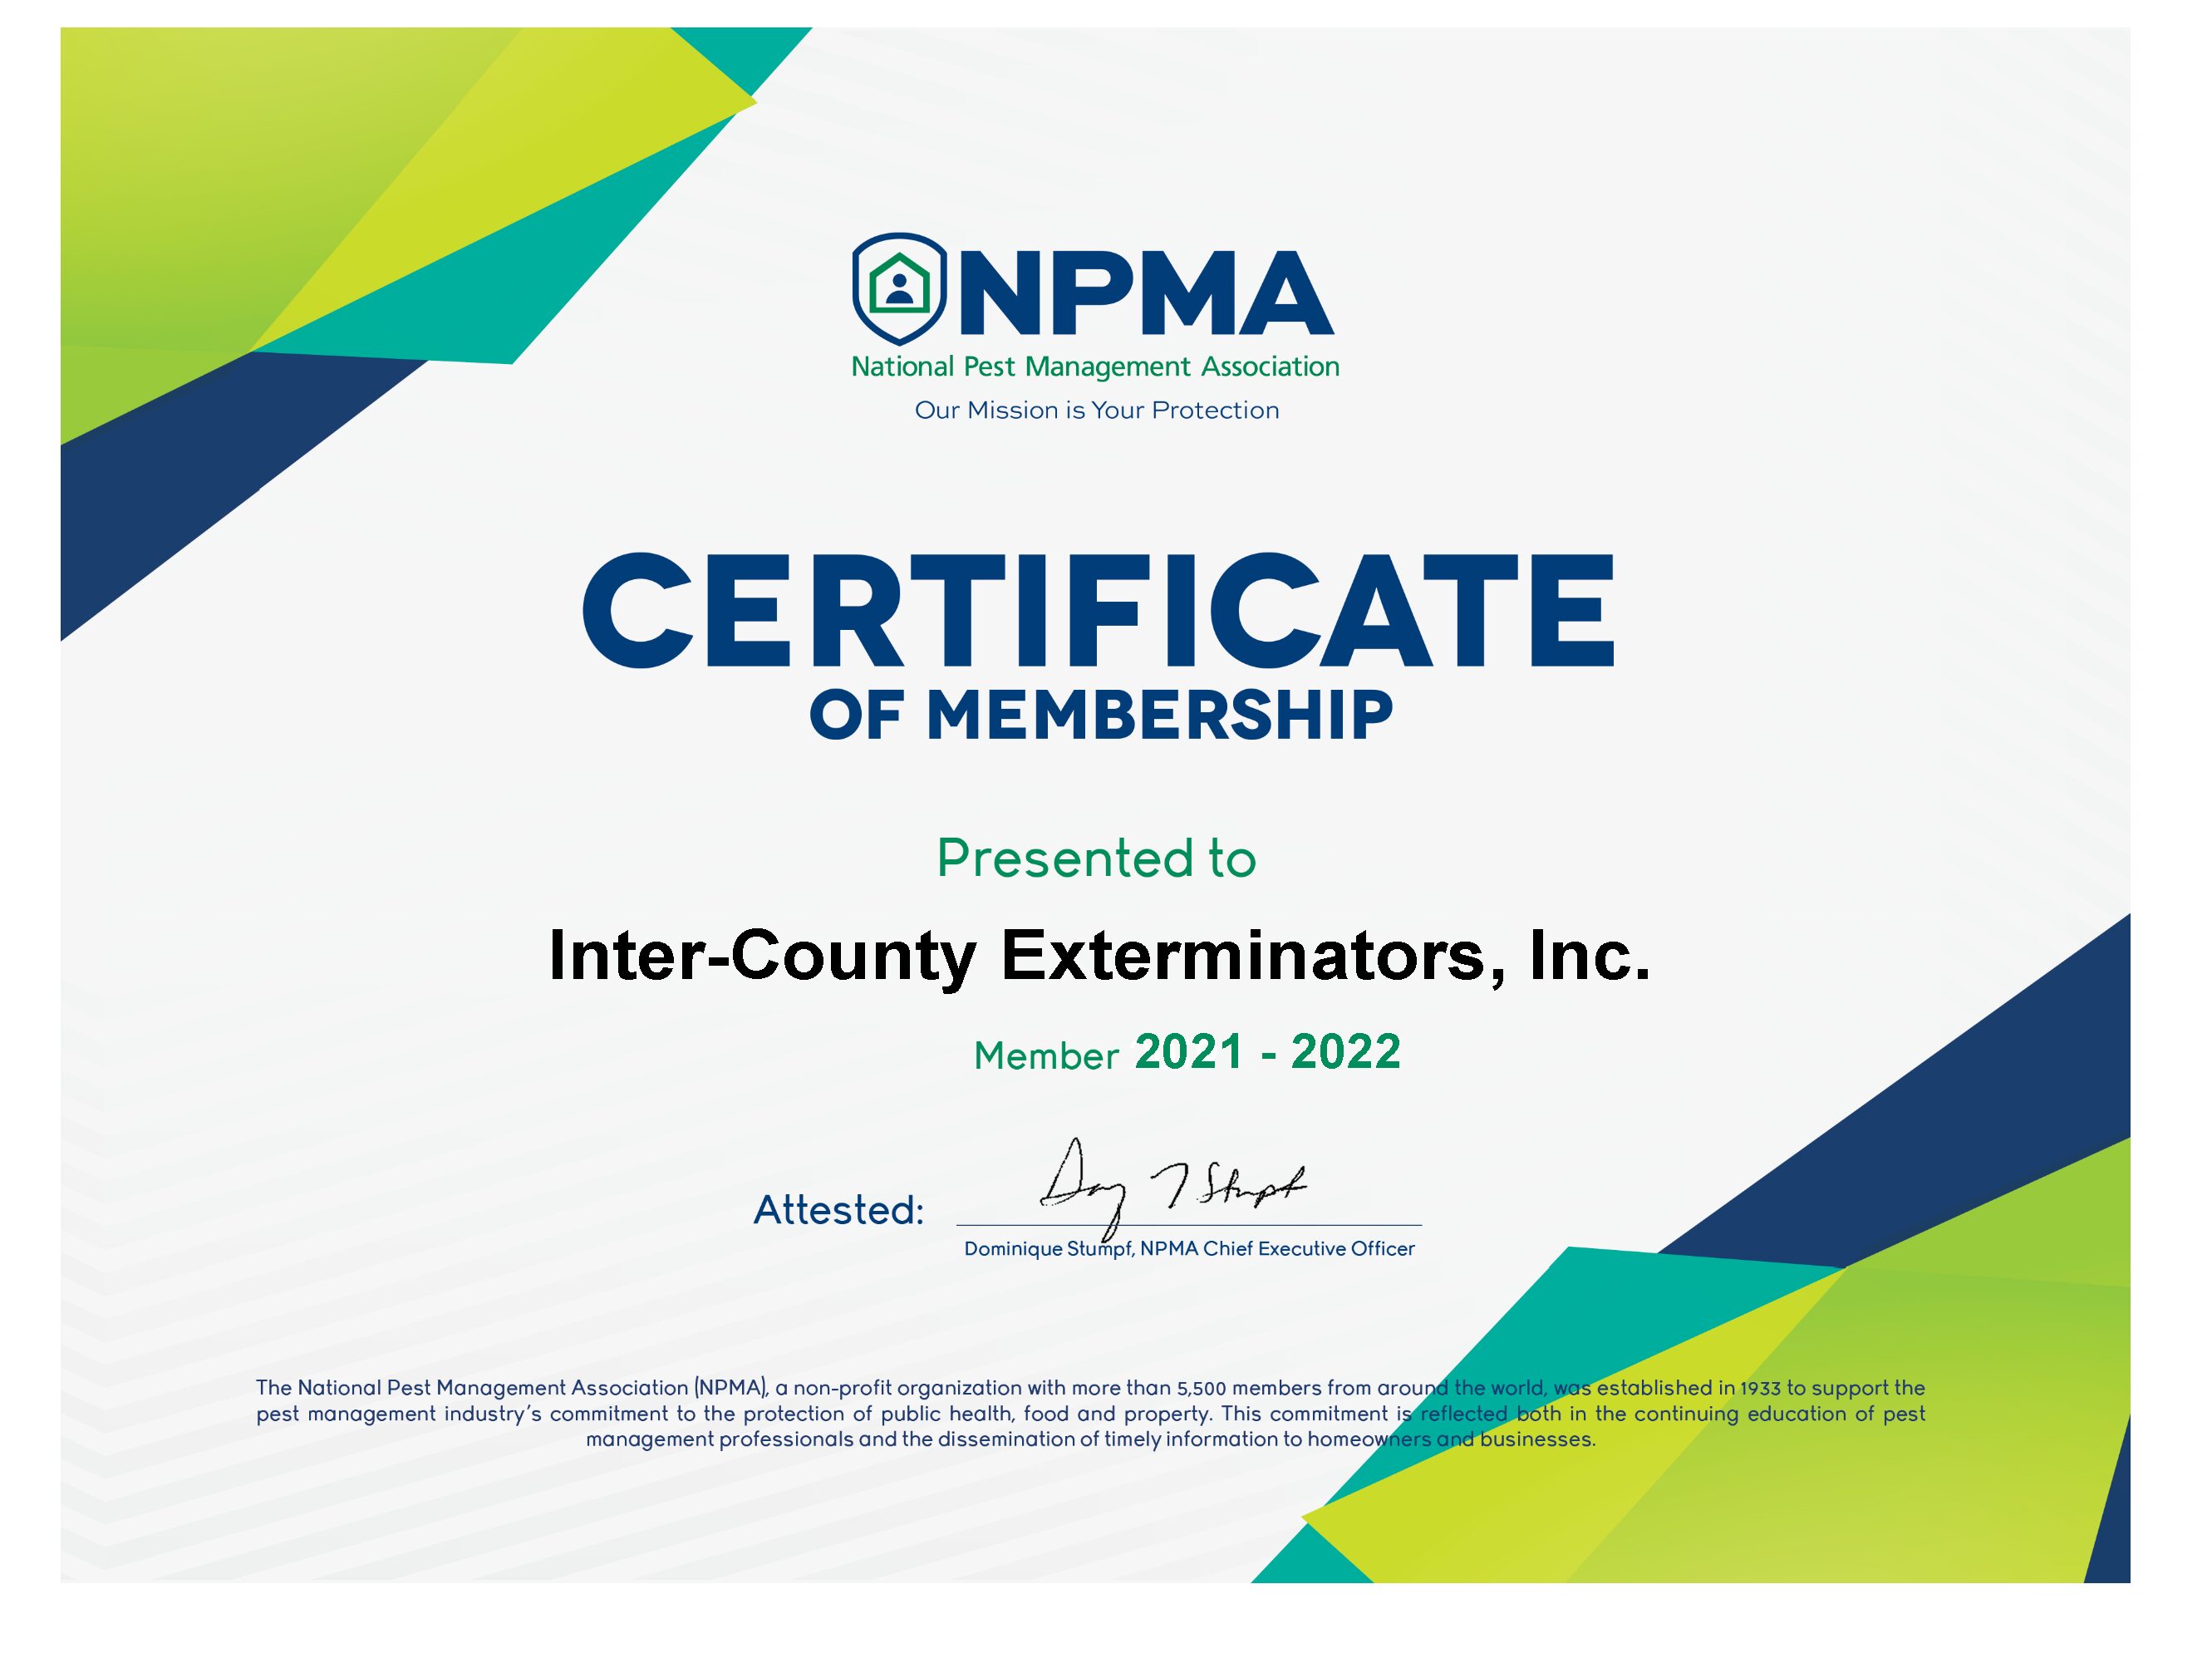 National Pest Management Association certificate